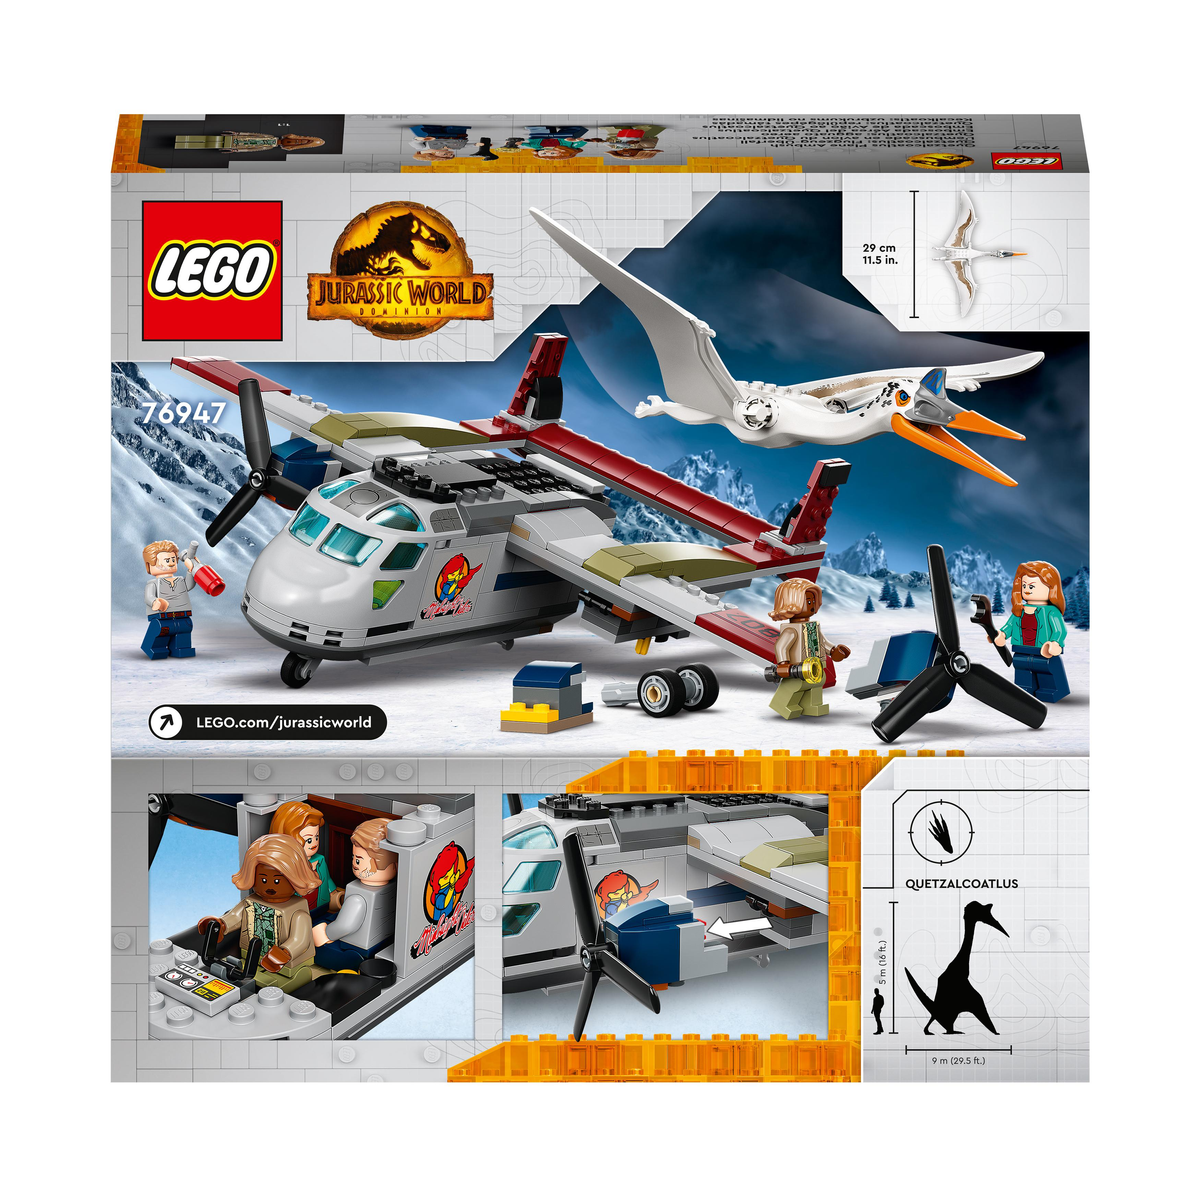 LEGO 76947 QUETZALCOATLUS: FLUGZEUG-ÜBERFALL Bausatz